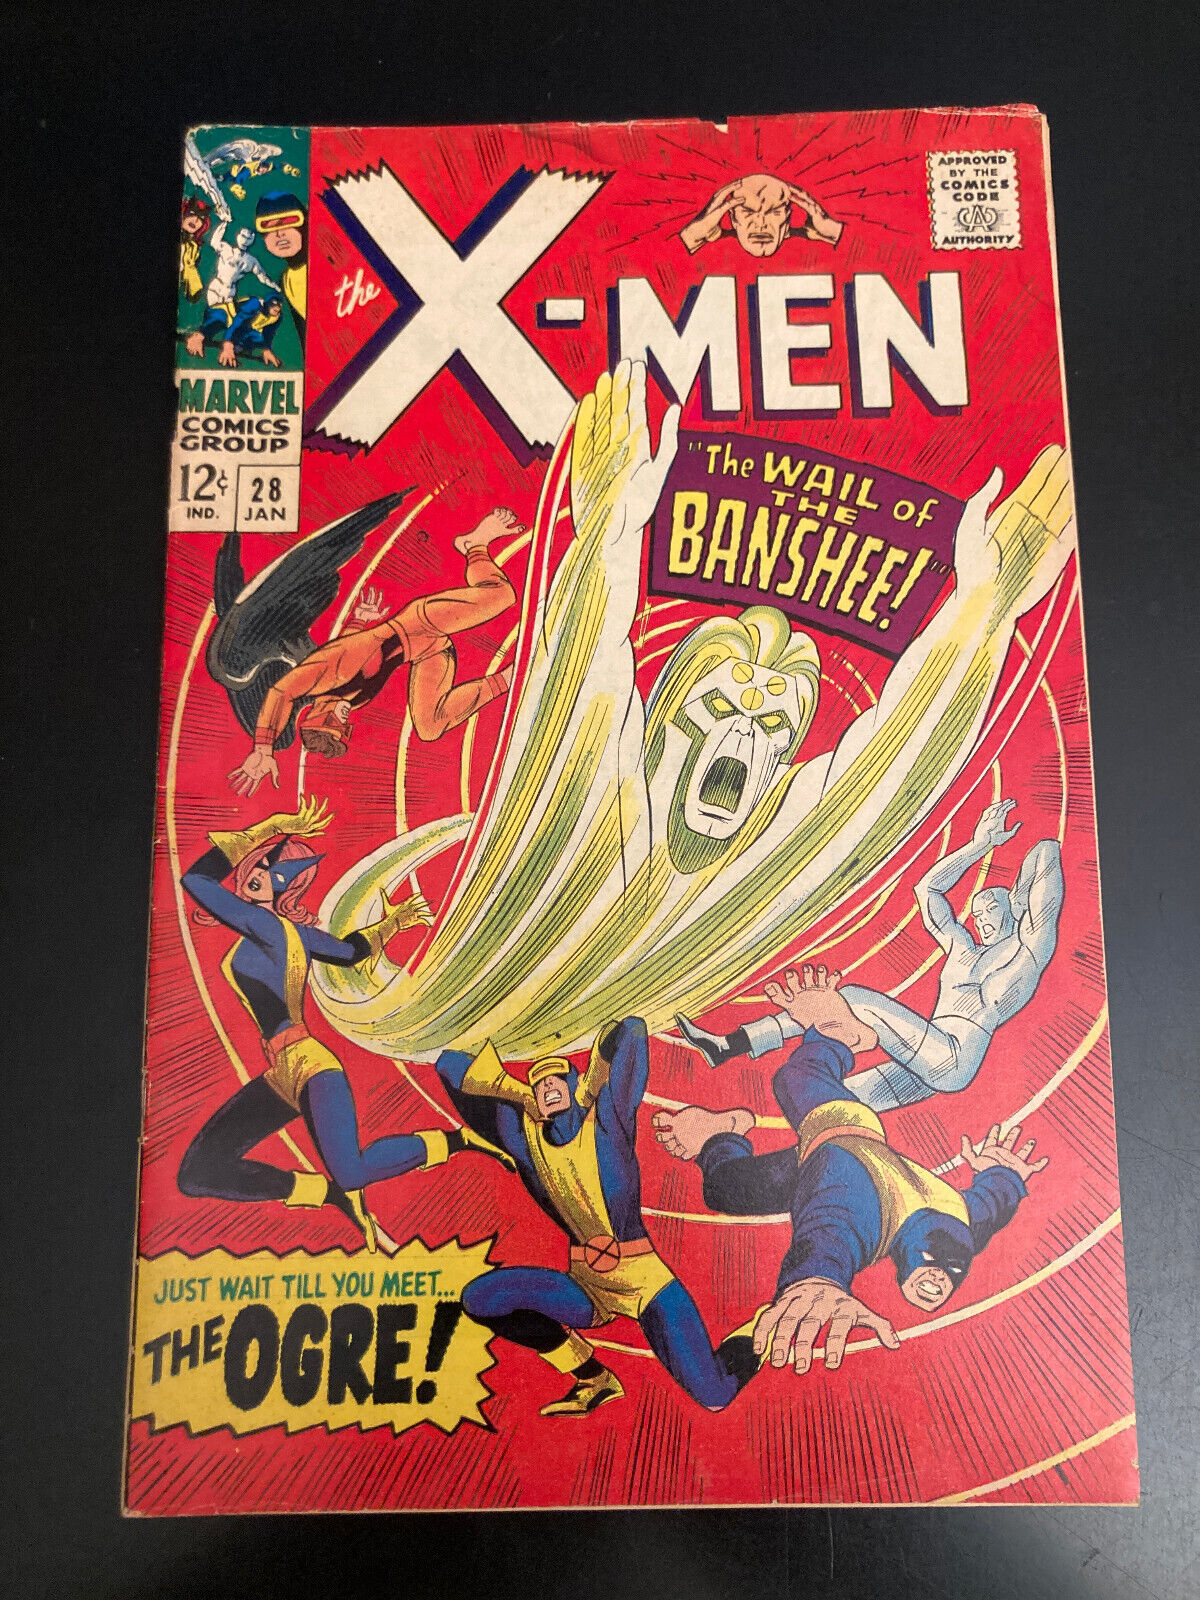 Lookee... X-MEN #28 *Key 1st Banshee* Bright, Colorful & Glossy